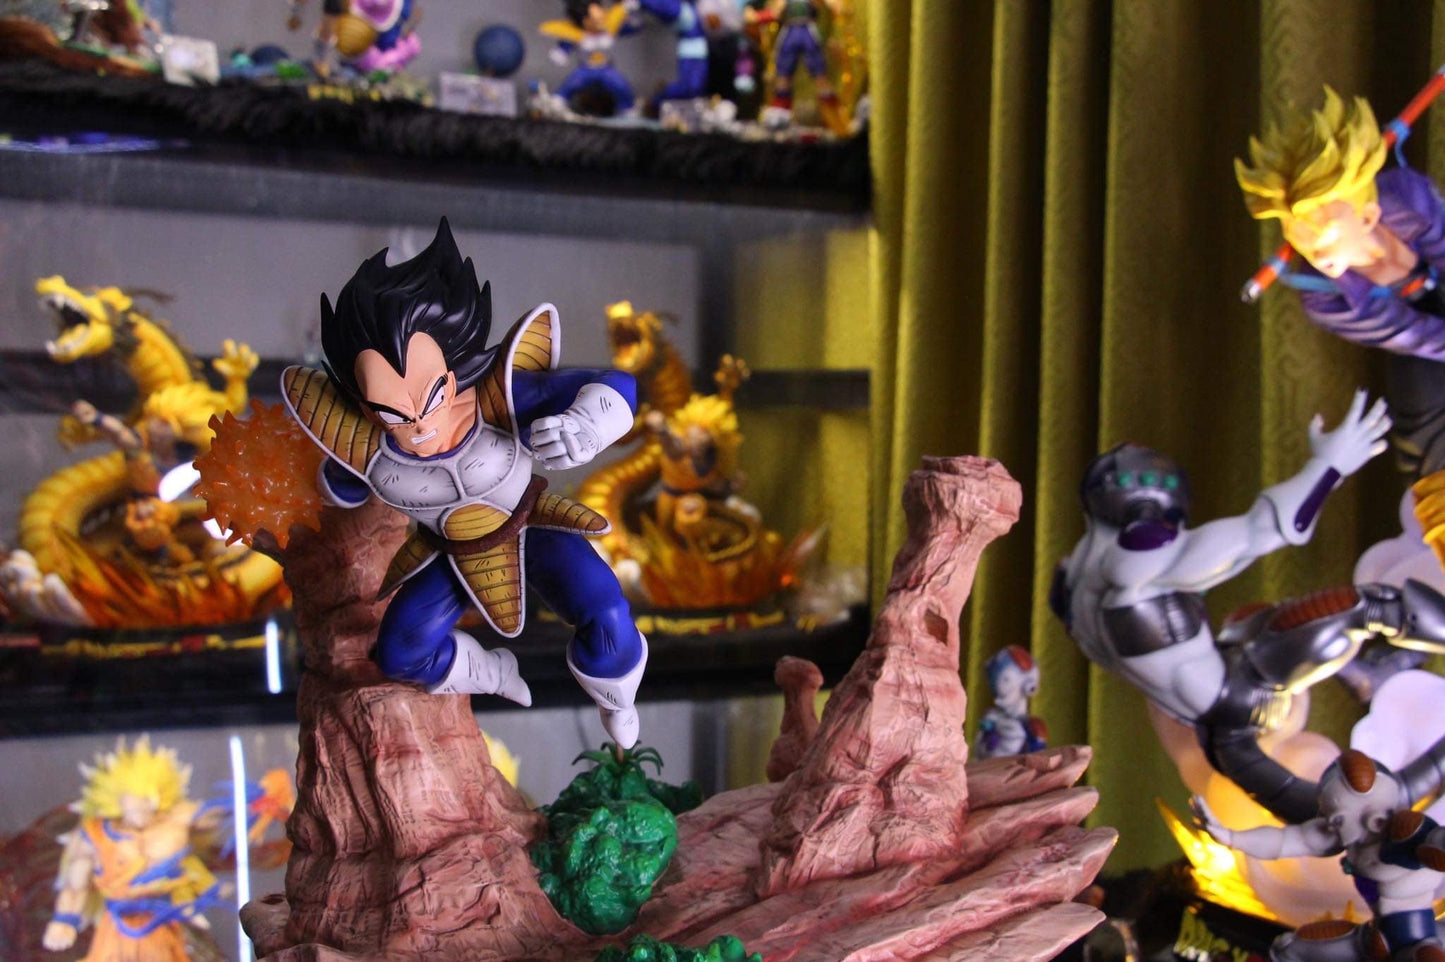 PBR - Goku vs Vegeta StatueCorp